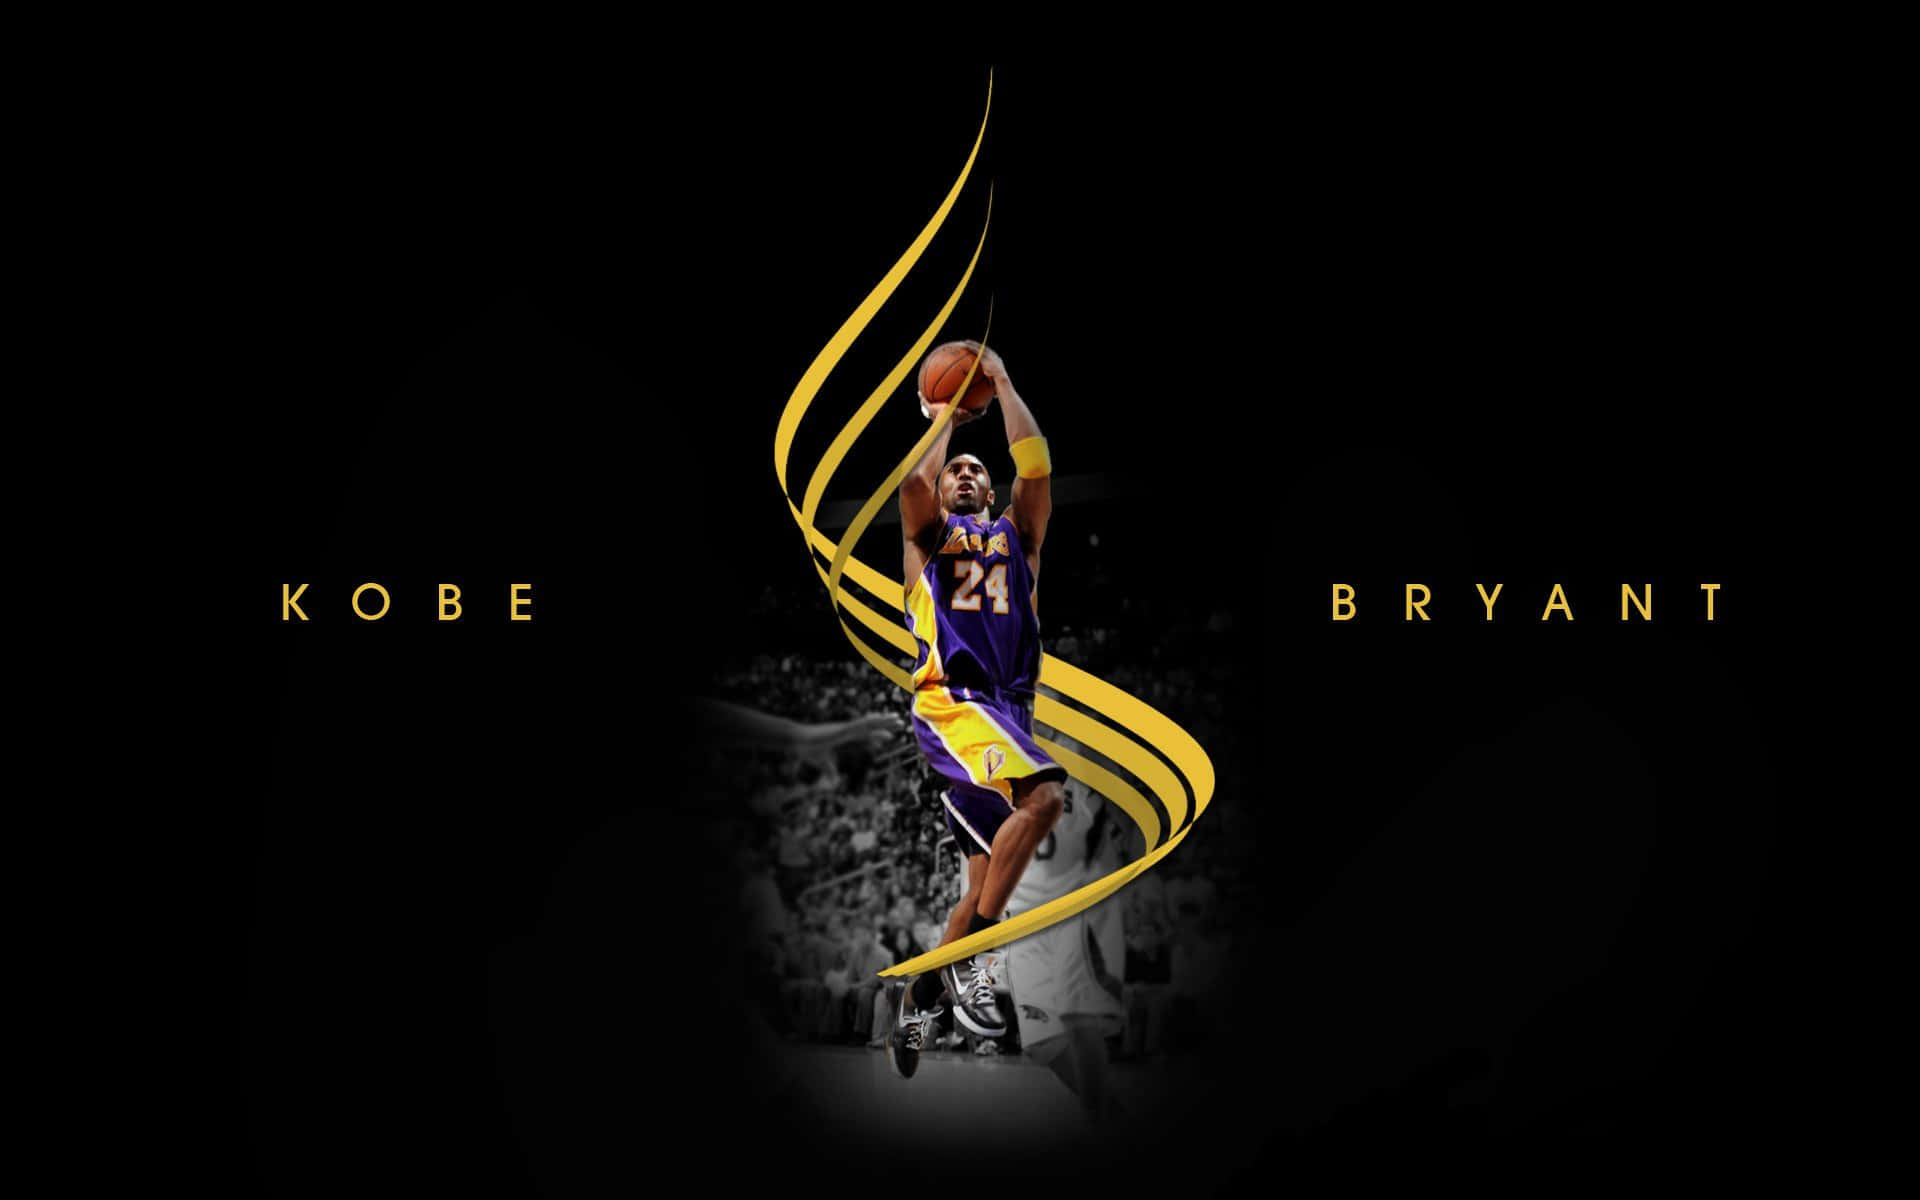 Kobe Bryant makes an unstoppable shot